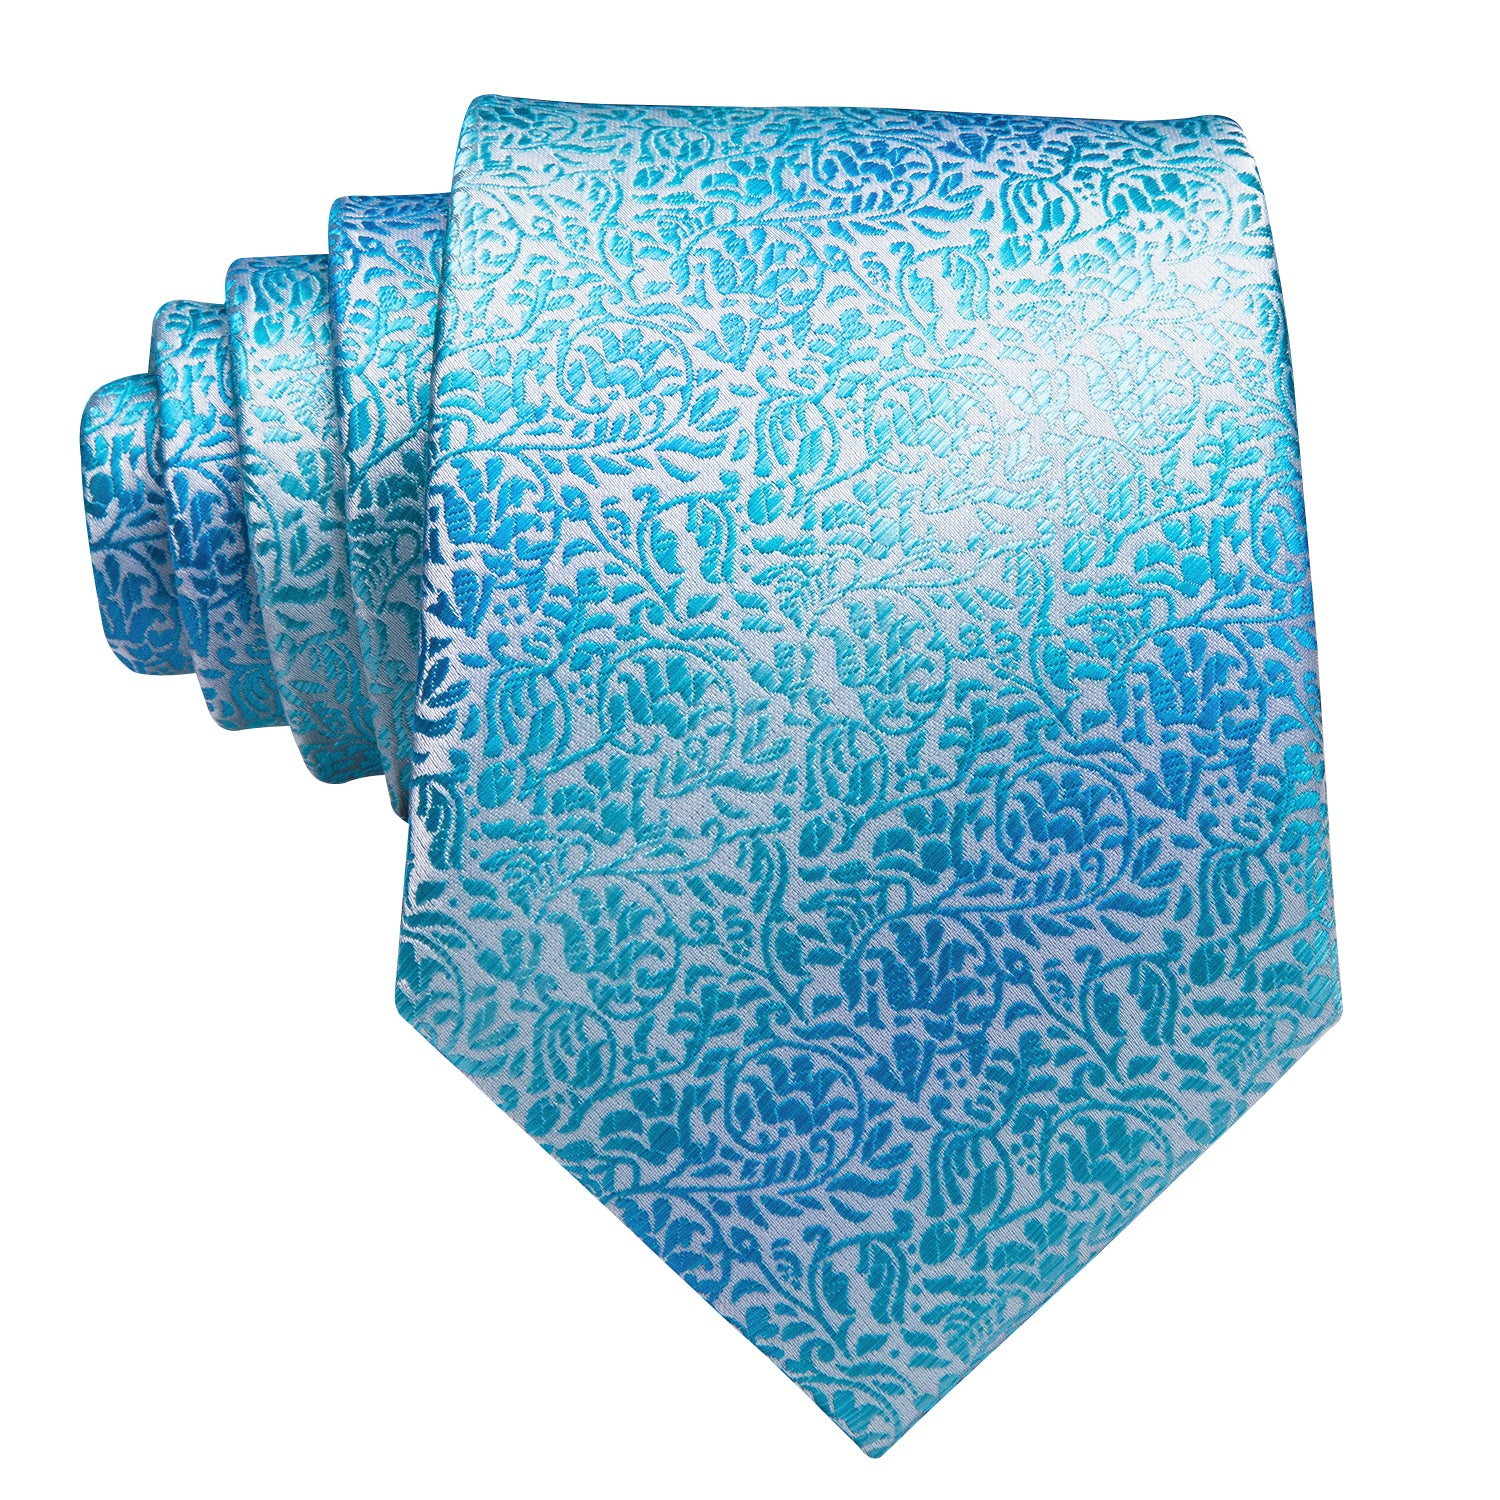  Skyblue Tie Light Blue Floral Men's Necktie Hanky Cufflinks Set